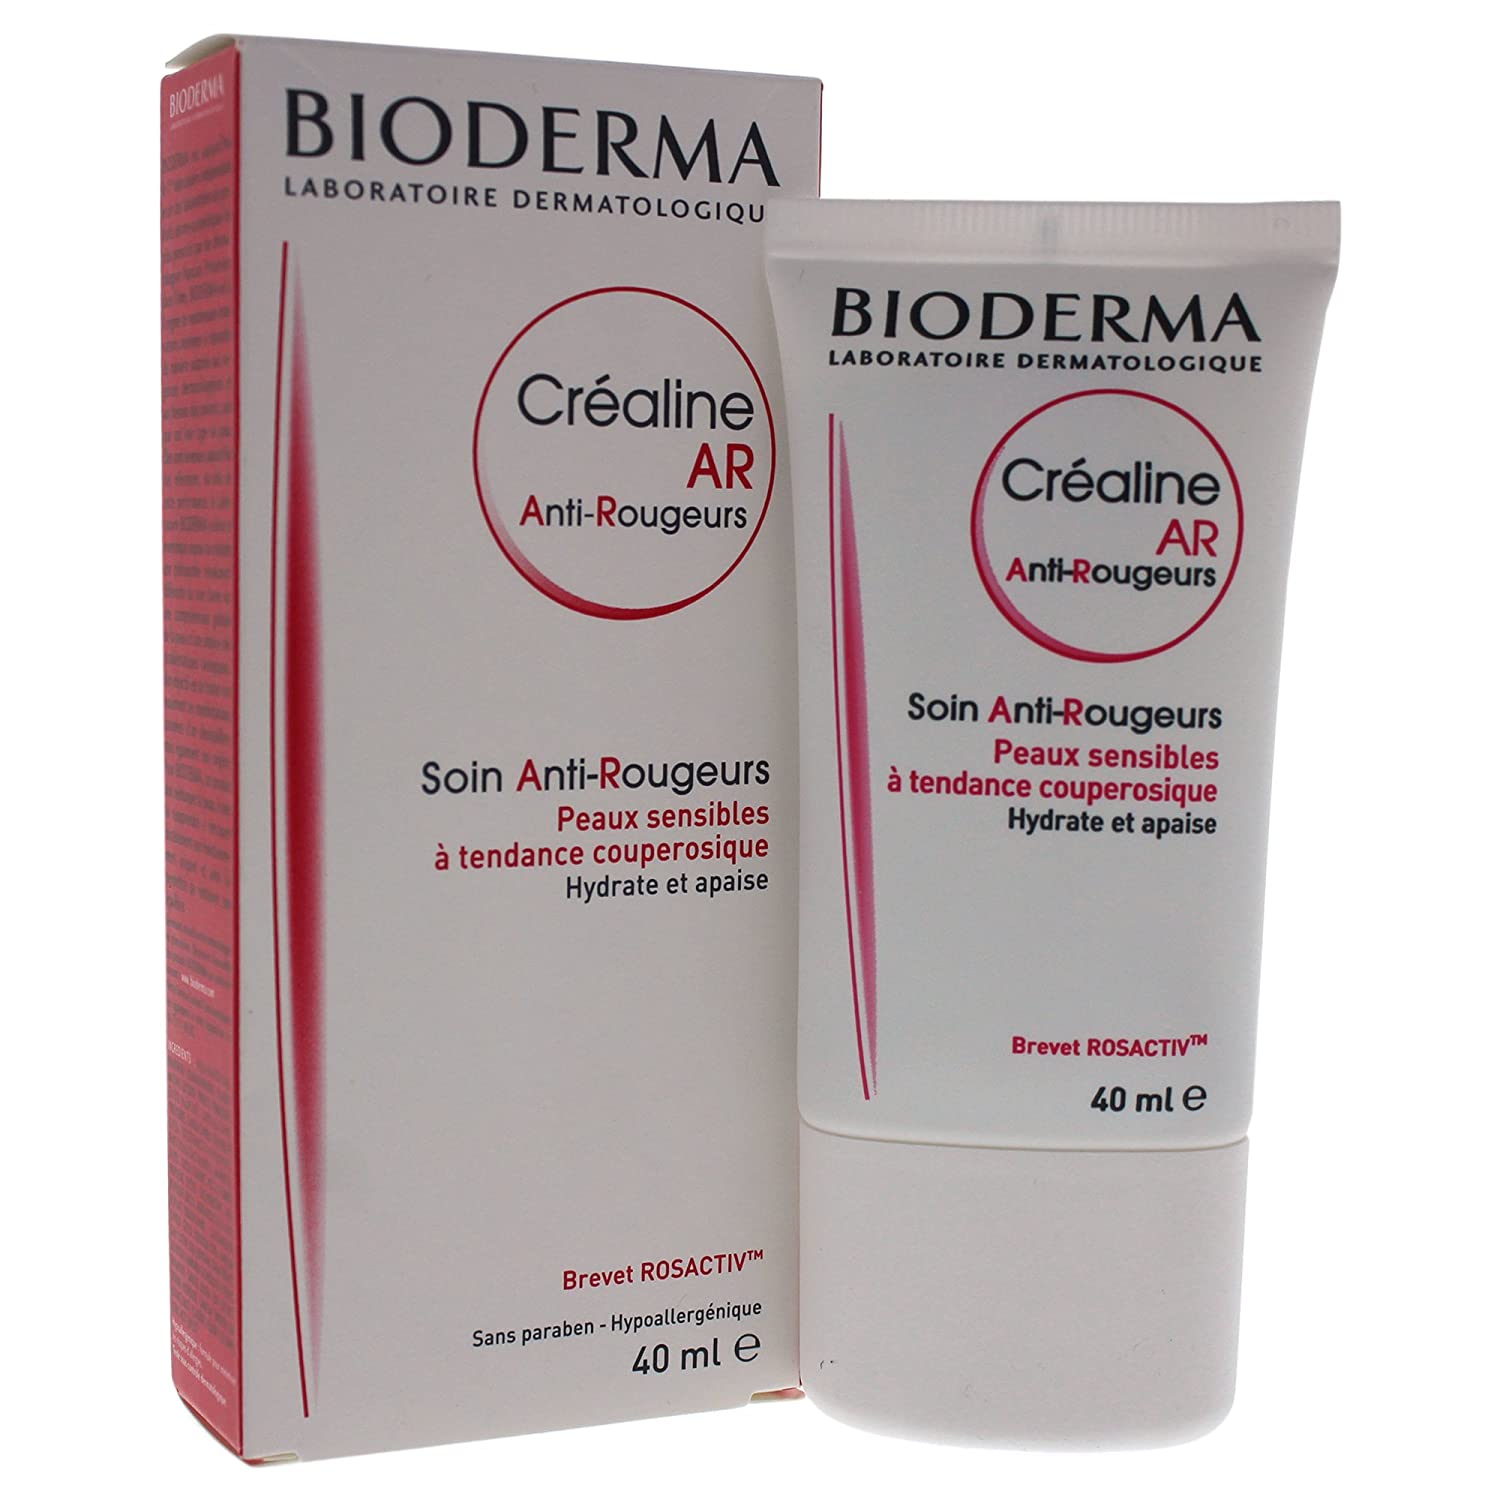 Bioderma Créaline AR Anti Redness Care for Sensitive Skin 40ml